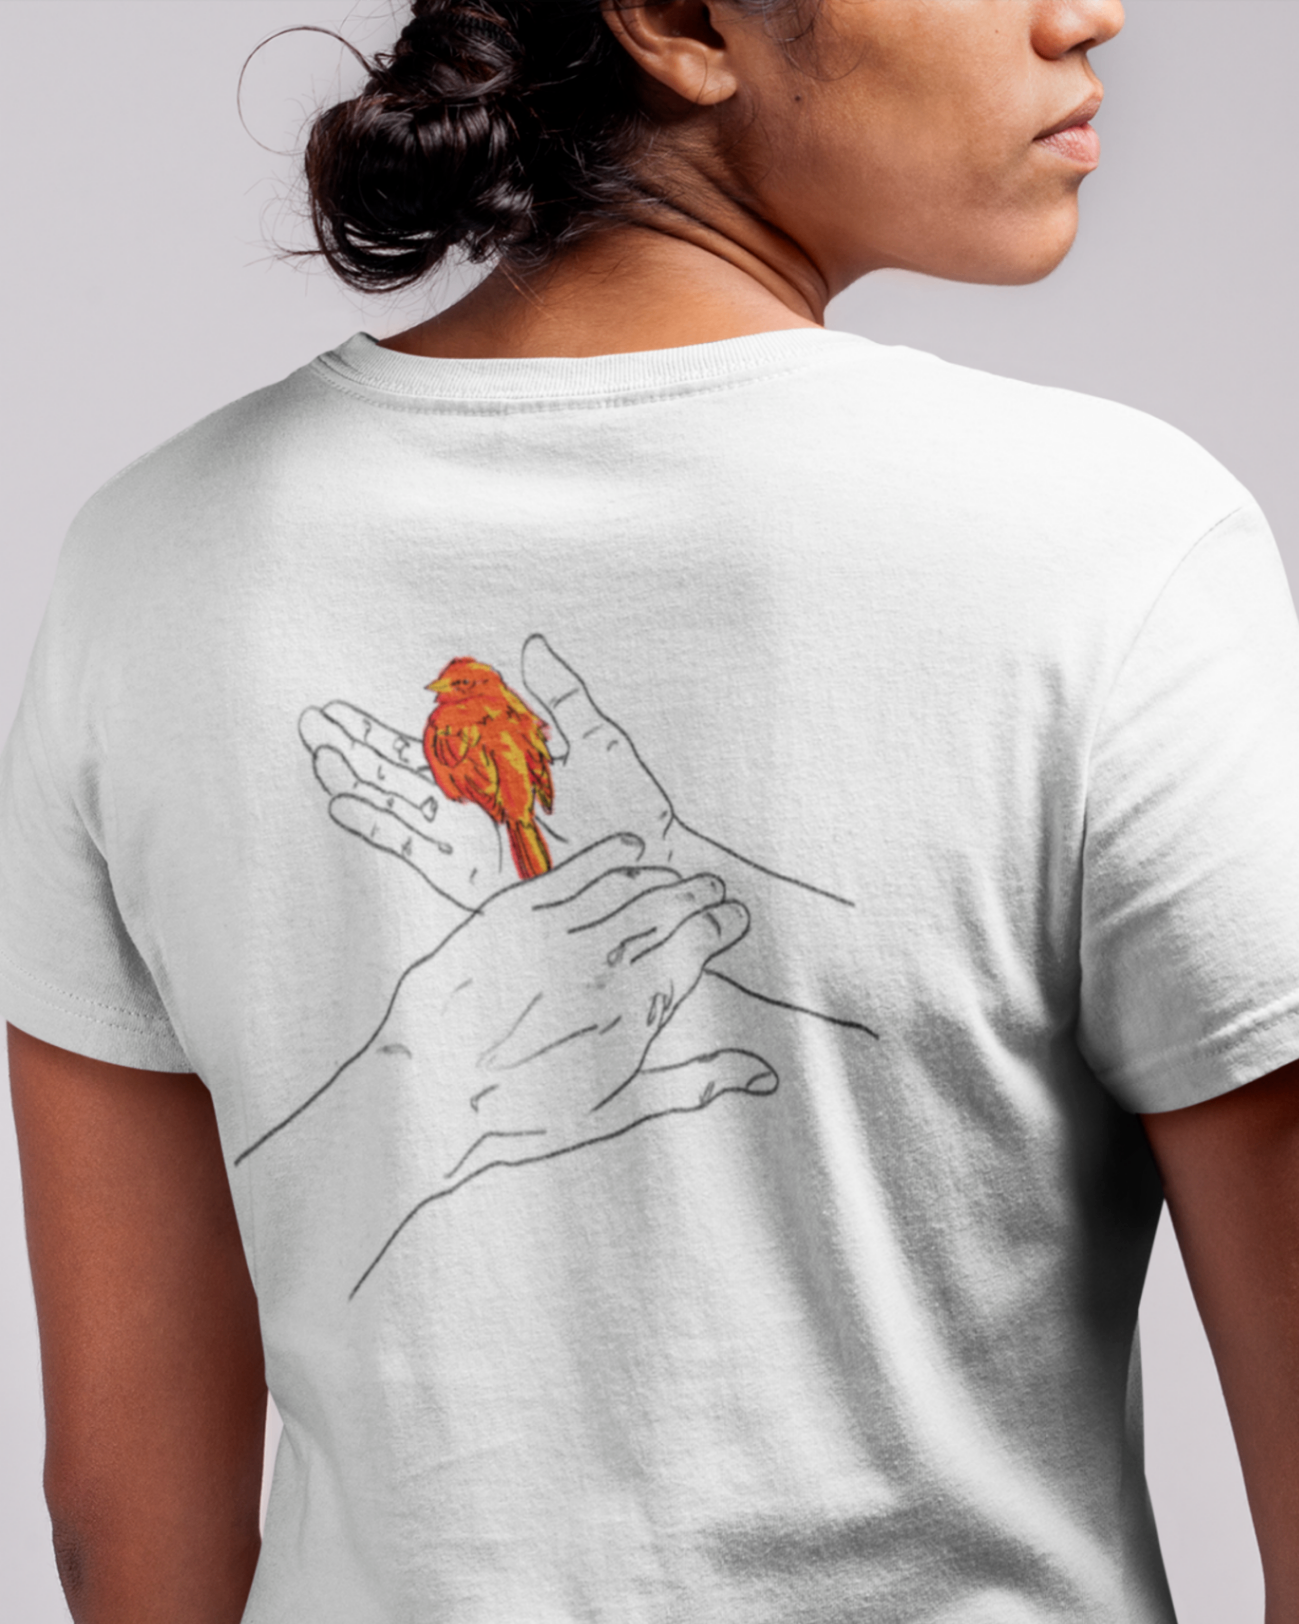 Women's "Grasp Sparrow's Tail" T-shirt